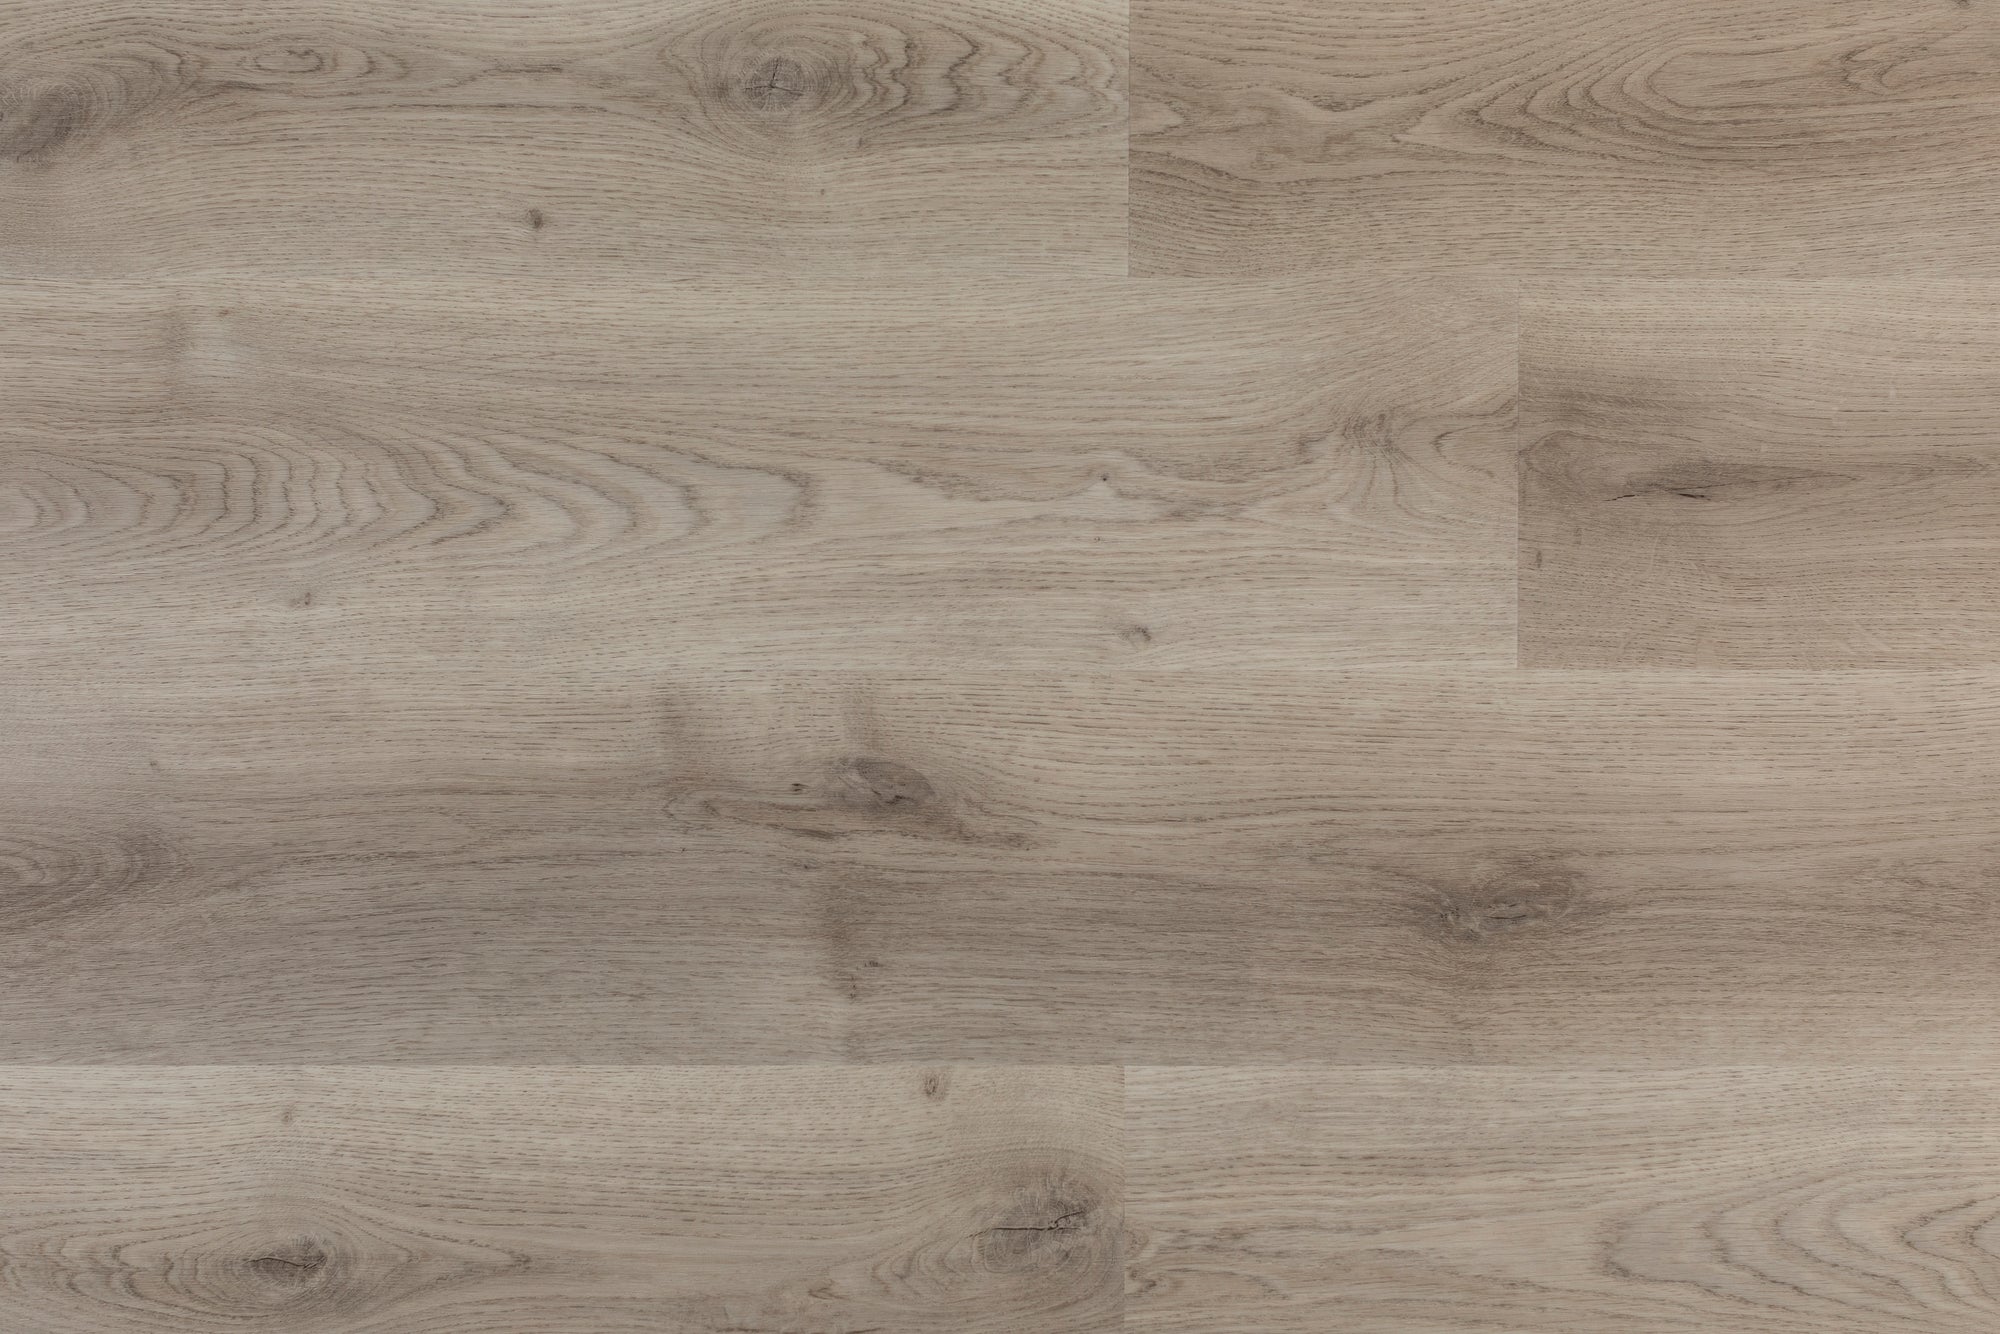 Dacite Maverick vinyl plank underlay from our vinyl flooring collection